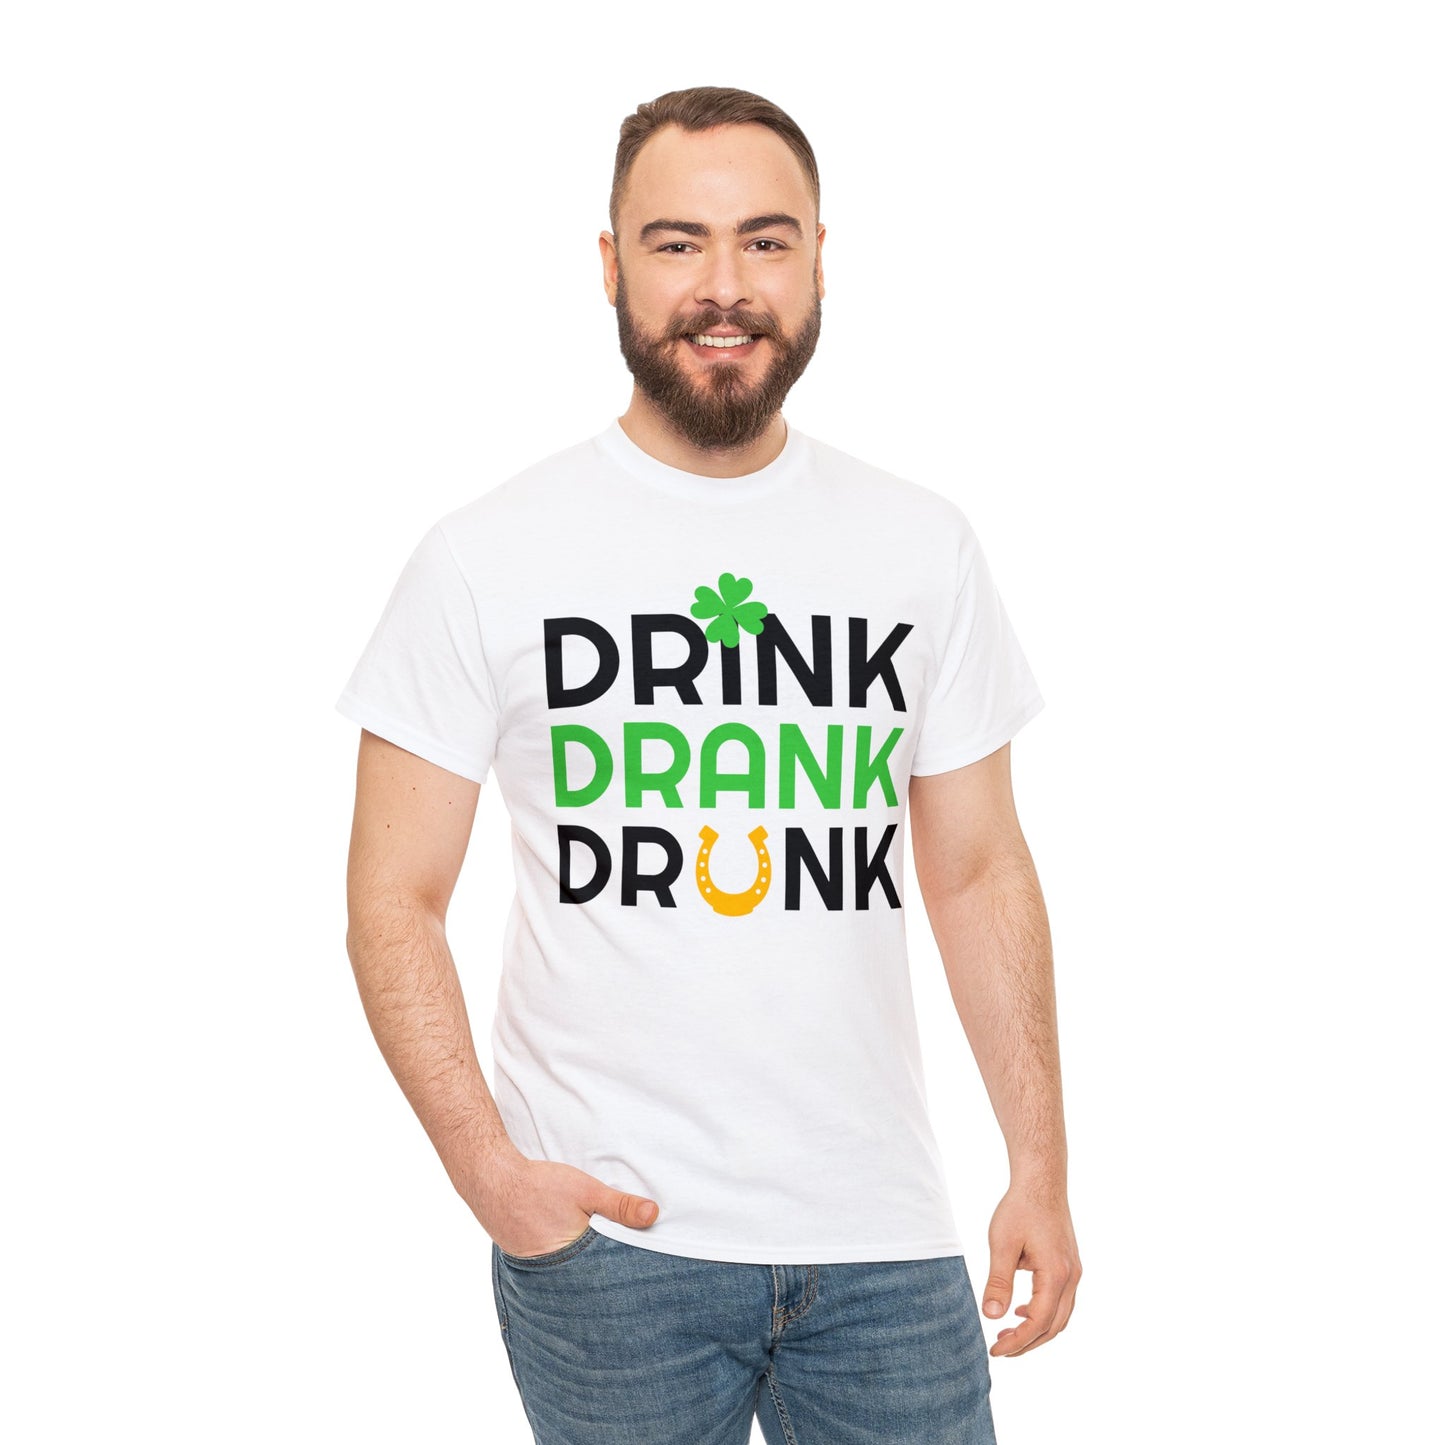 Fun T-Shirts - Drink. Drank, Drunk - St Patrick's Day